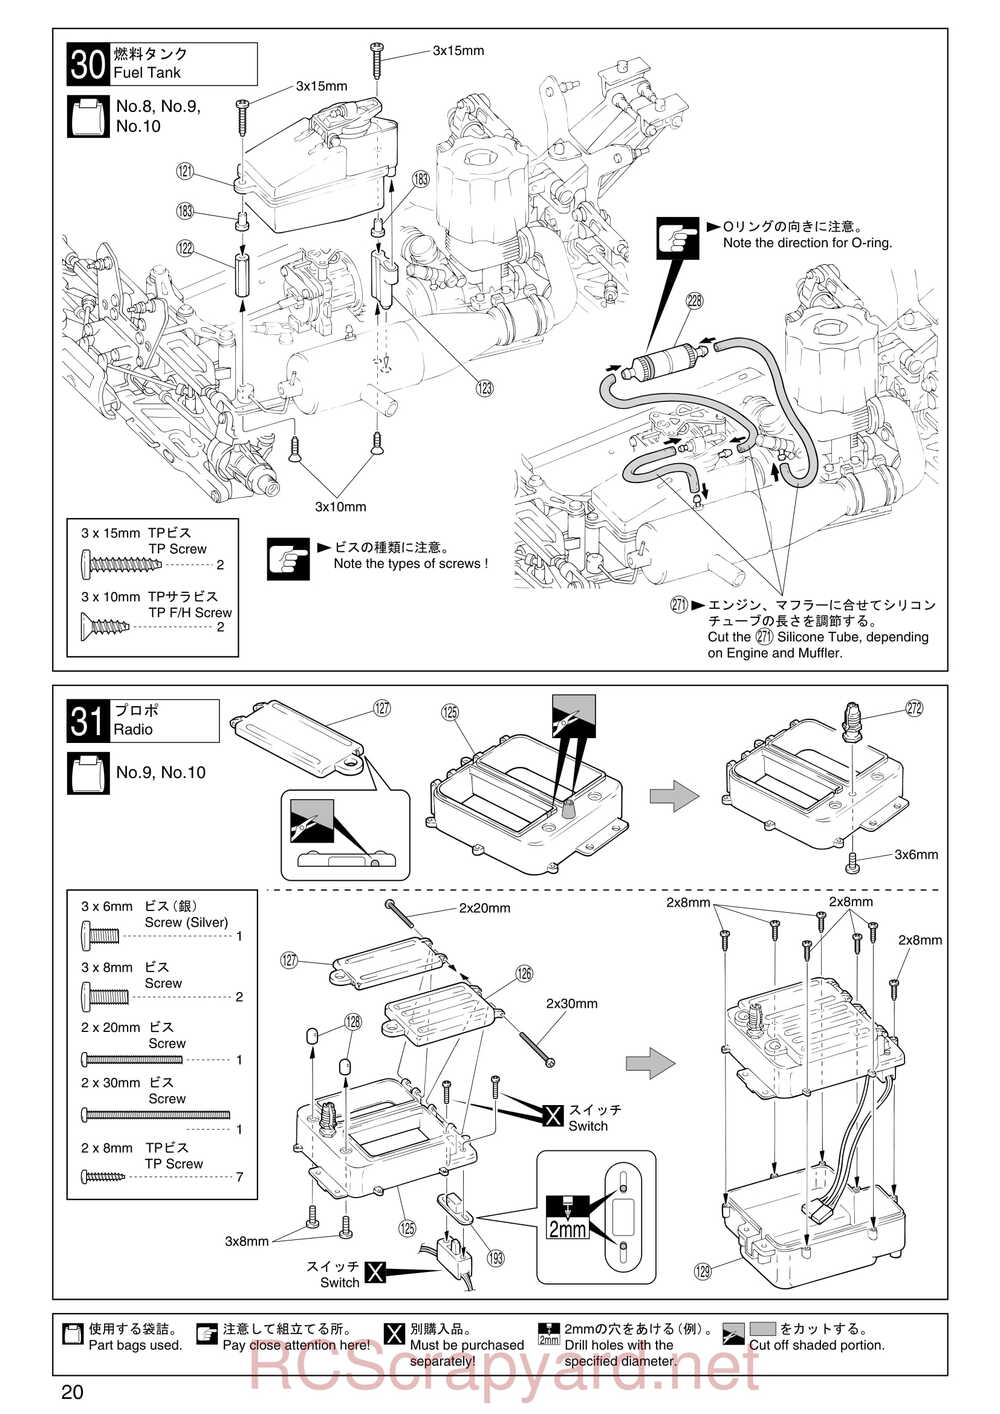 Kyosho - 31271 - Inferno-MP-7-5-Yuichi 2 - Manual - Page 20